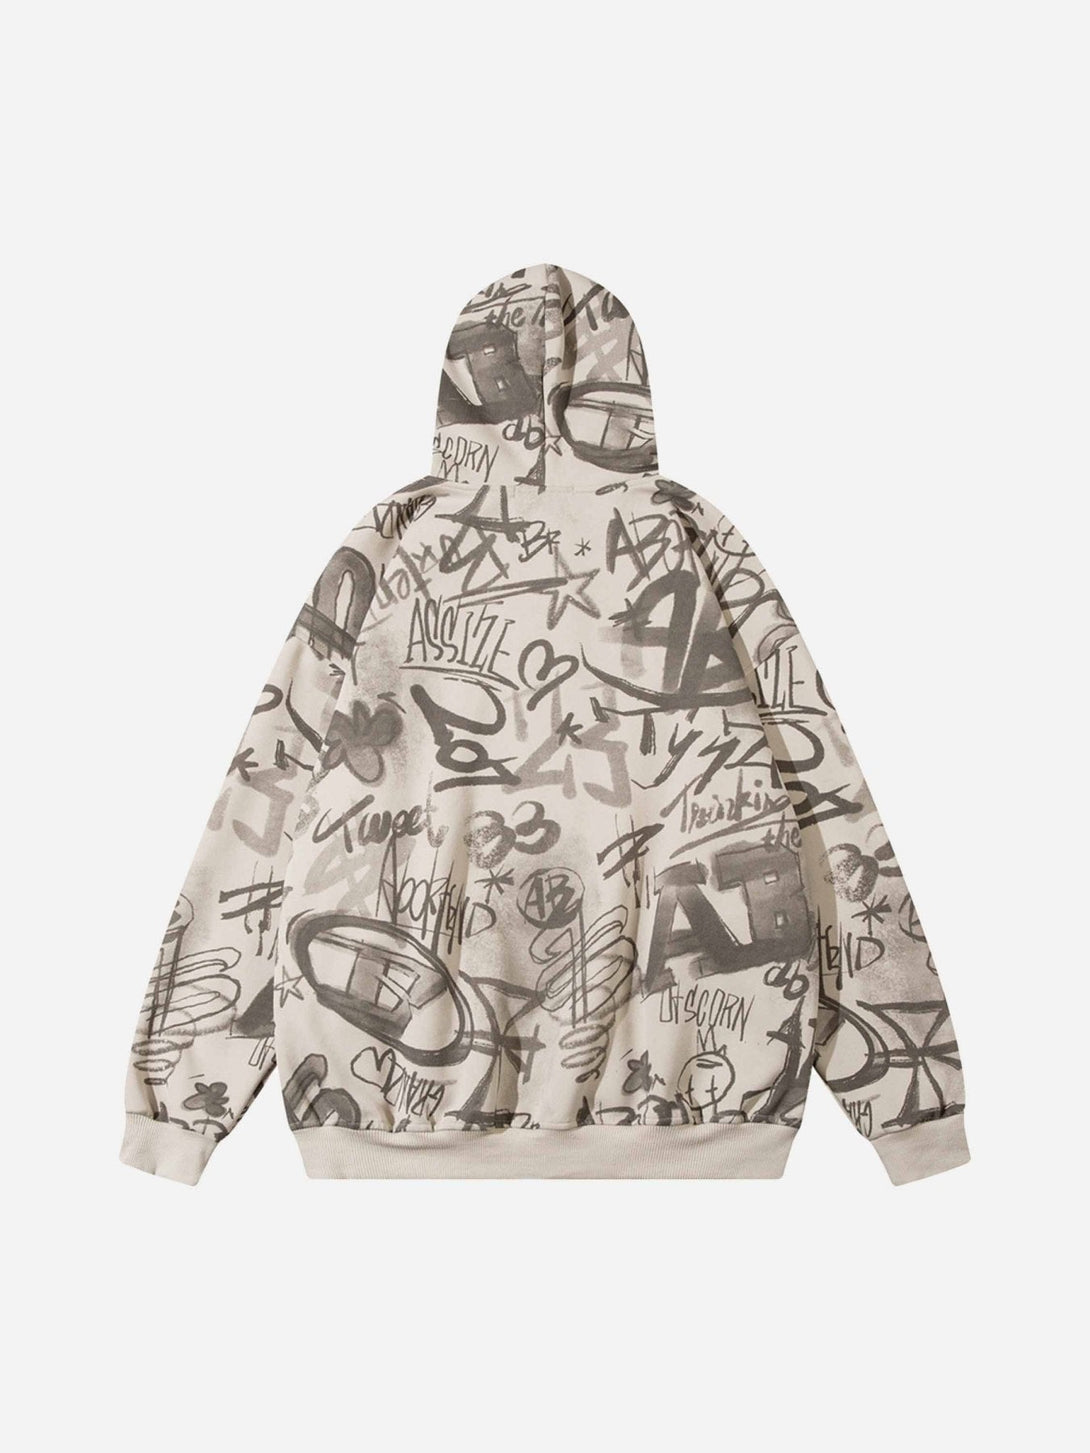 Majesda® - All Over Graffiti Print Hooded Sweatshirt - 1823- Outfit Ideas - Streetwear Fashion - majesda.com